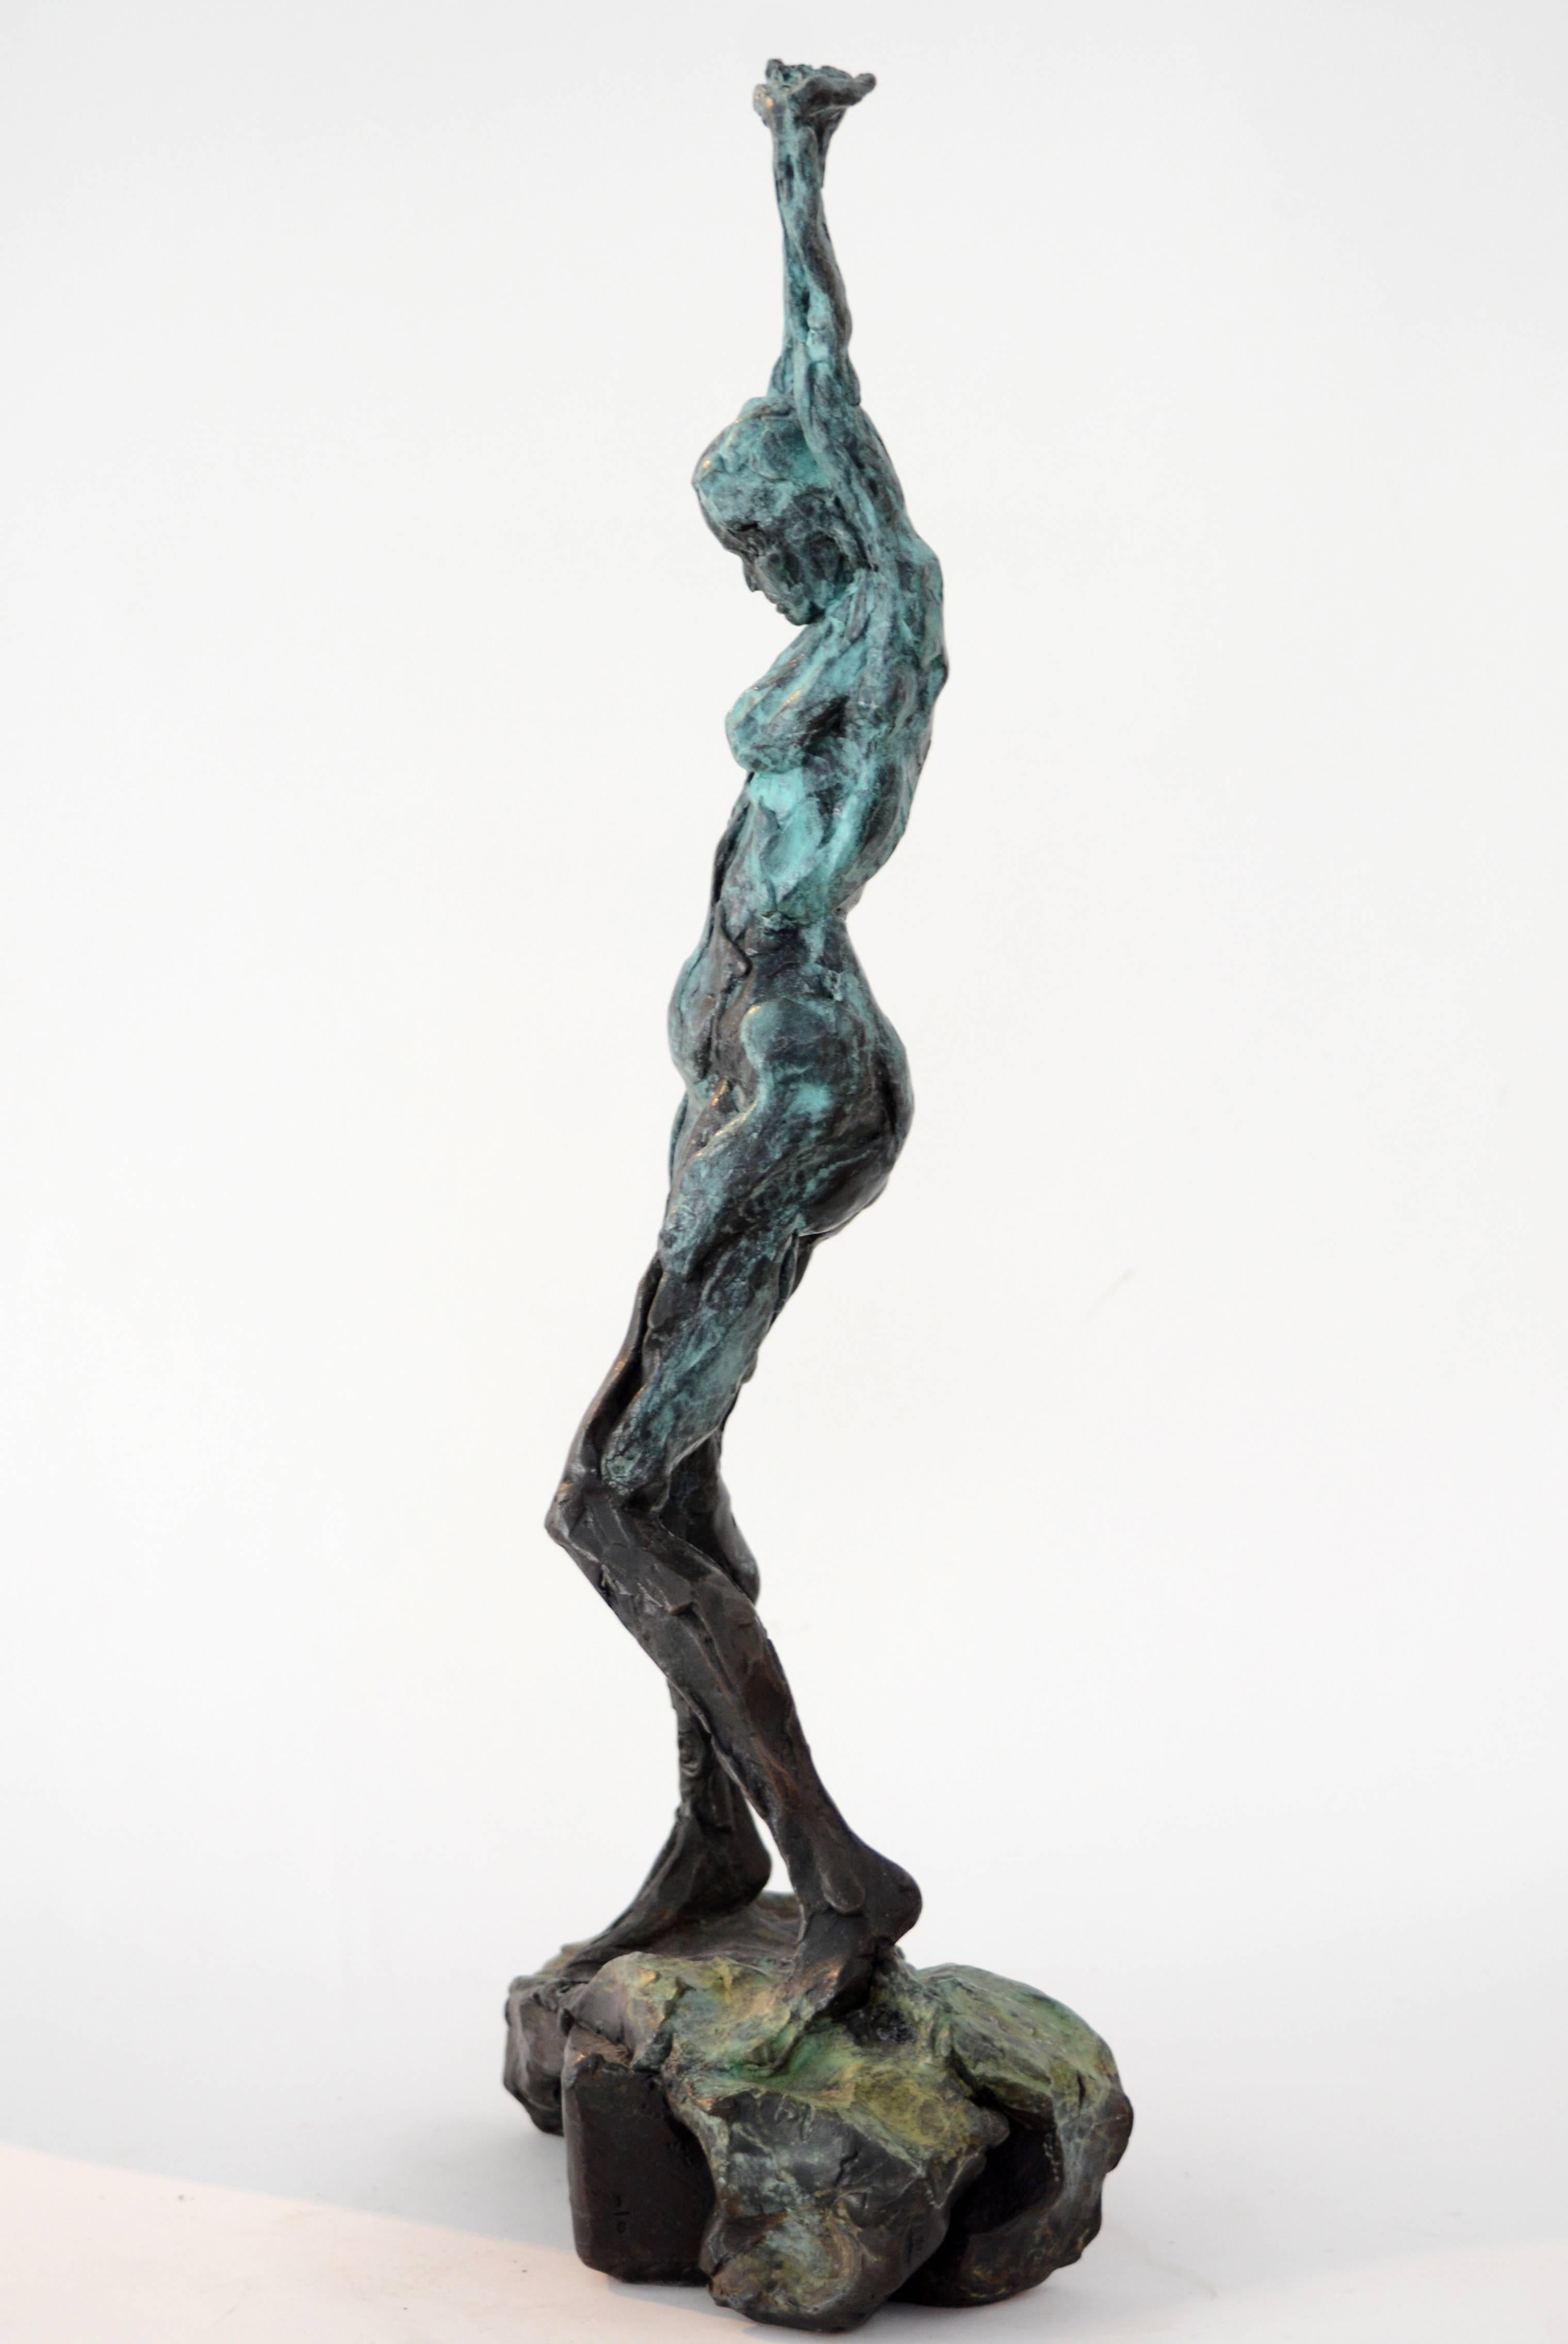 Sculpture No 31 - Gold Nude Sculpture by Richard Tosczak